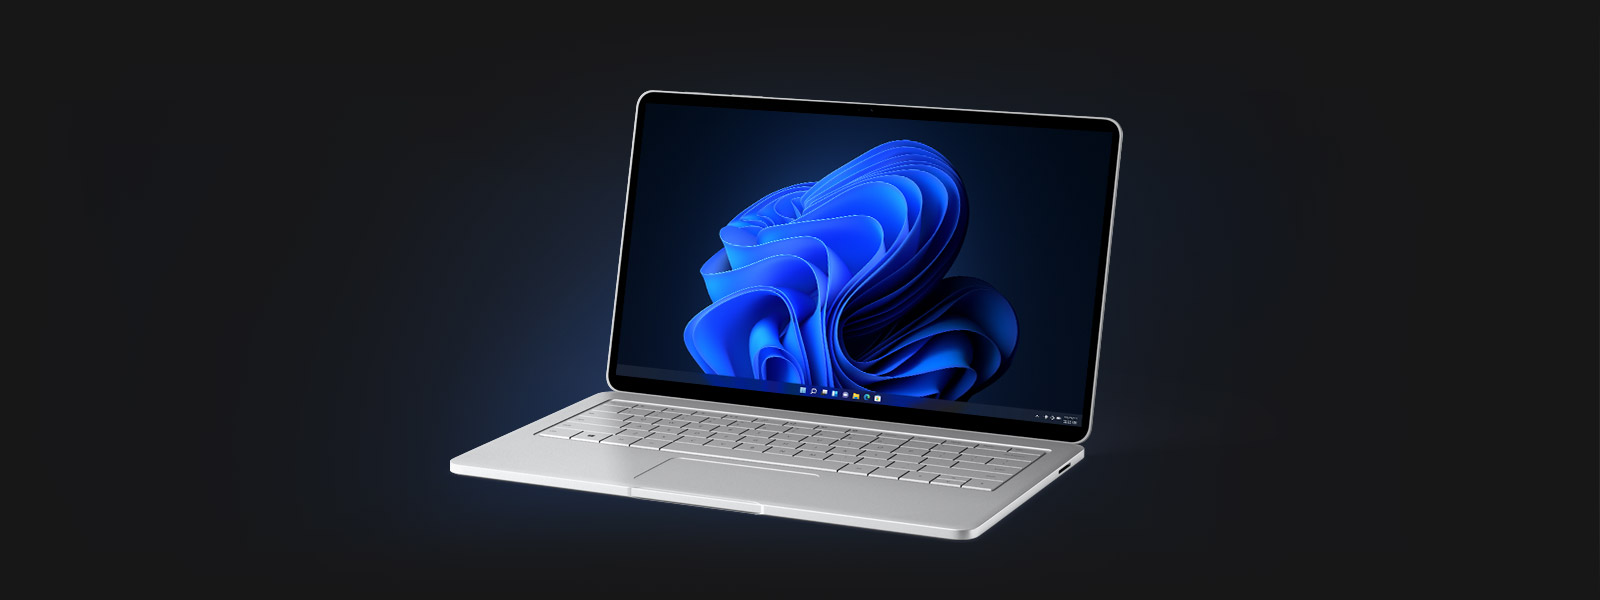 A laptop displaying the Windows 11 bloom desktop background screen